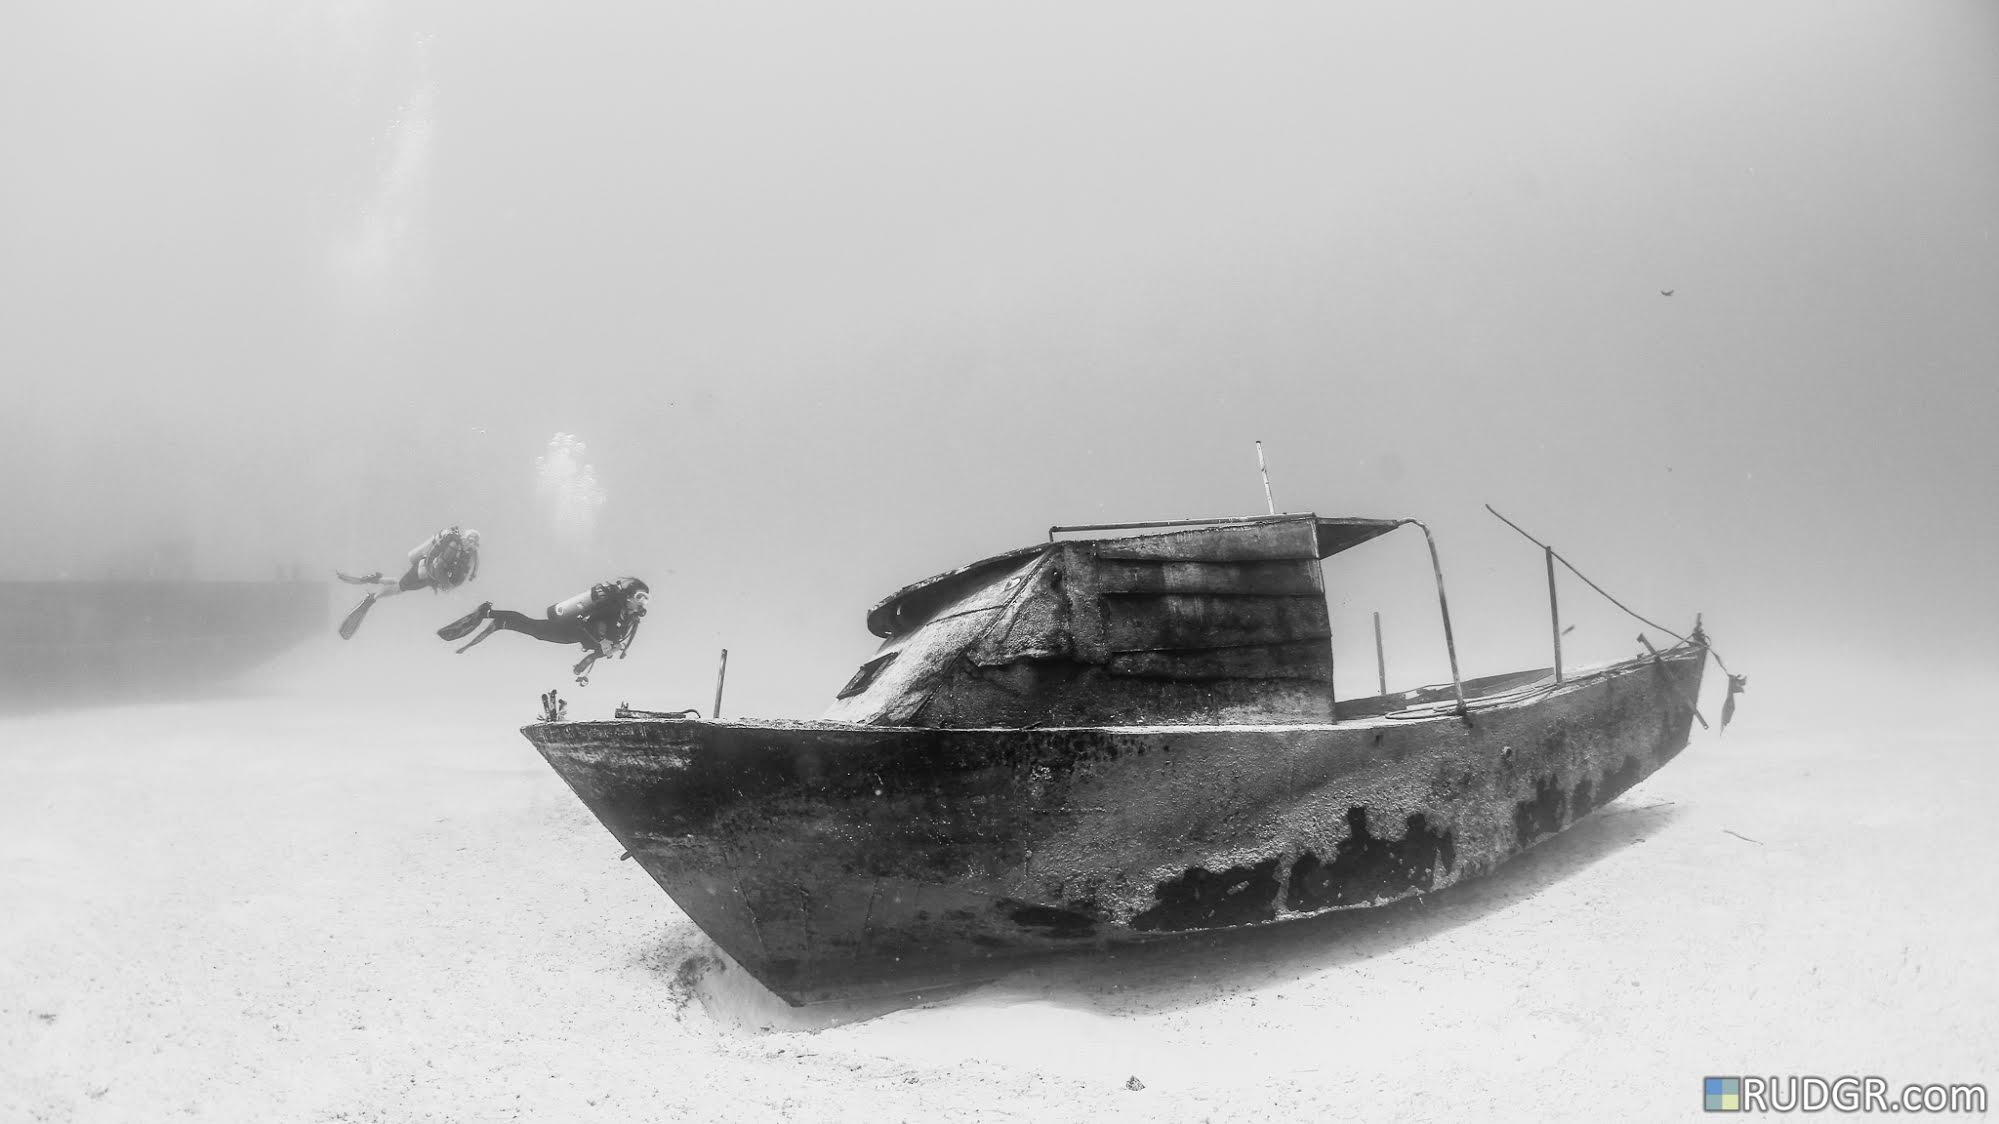 Check Out The Newest Wrecks Off North Bimini (All photo credits: RUDGR.com)